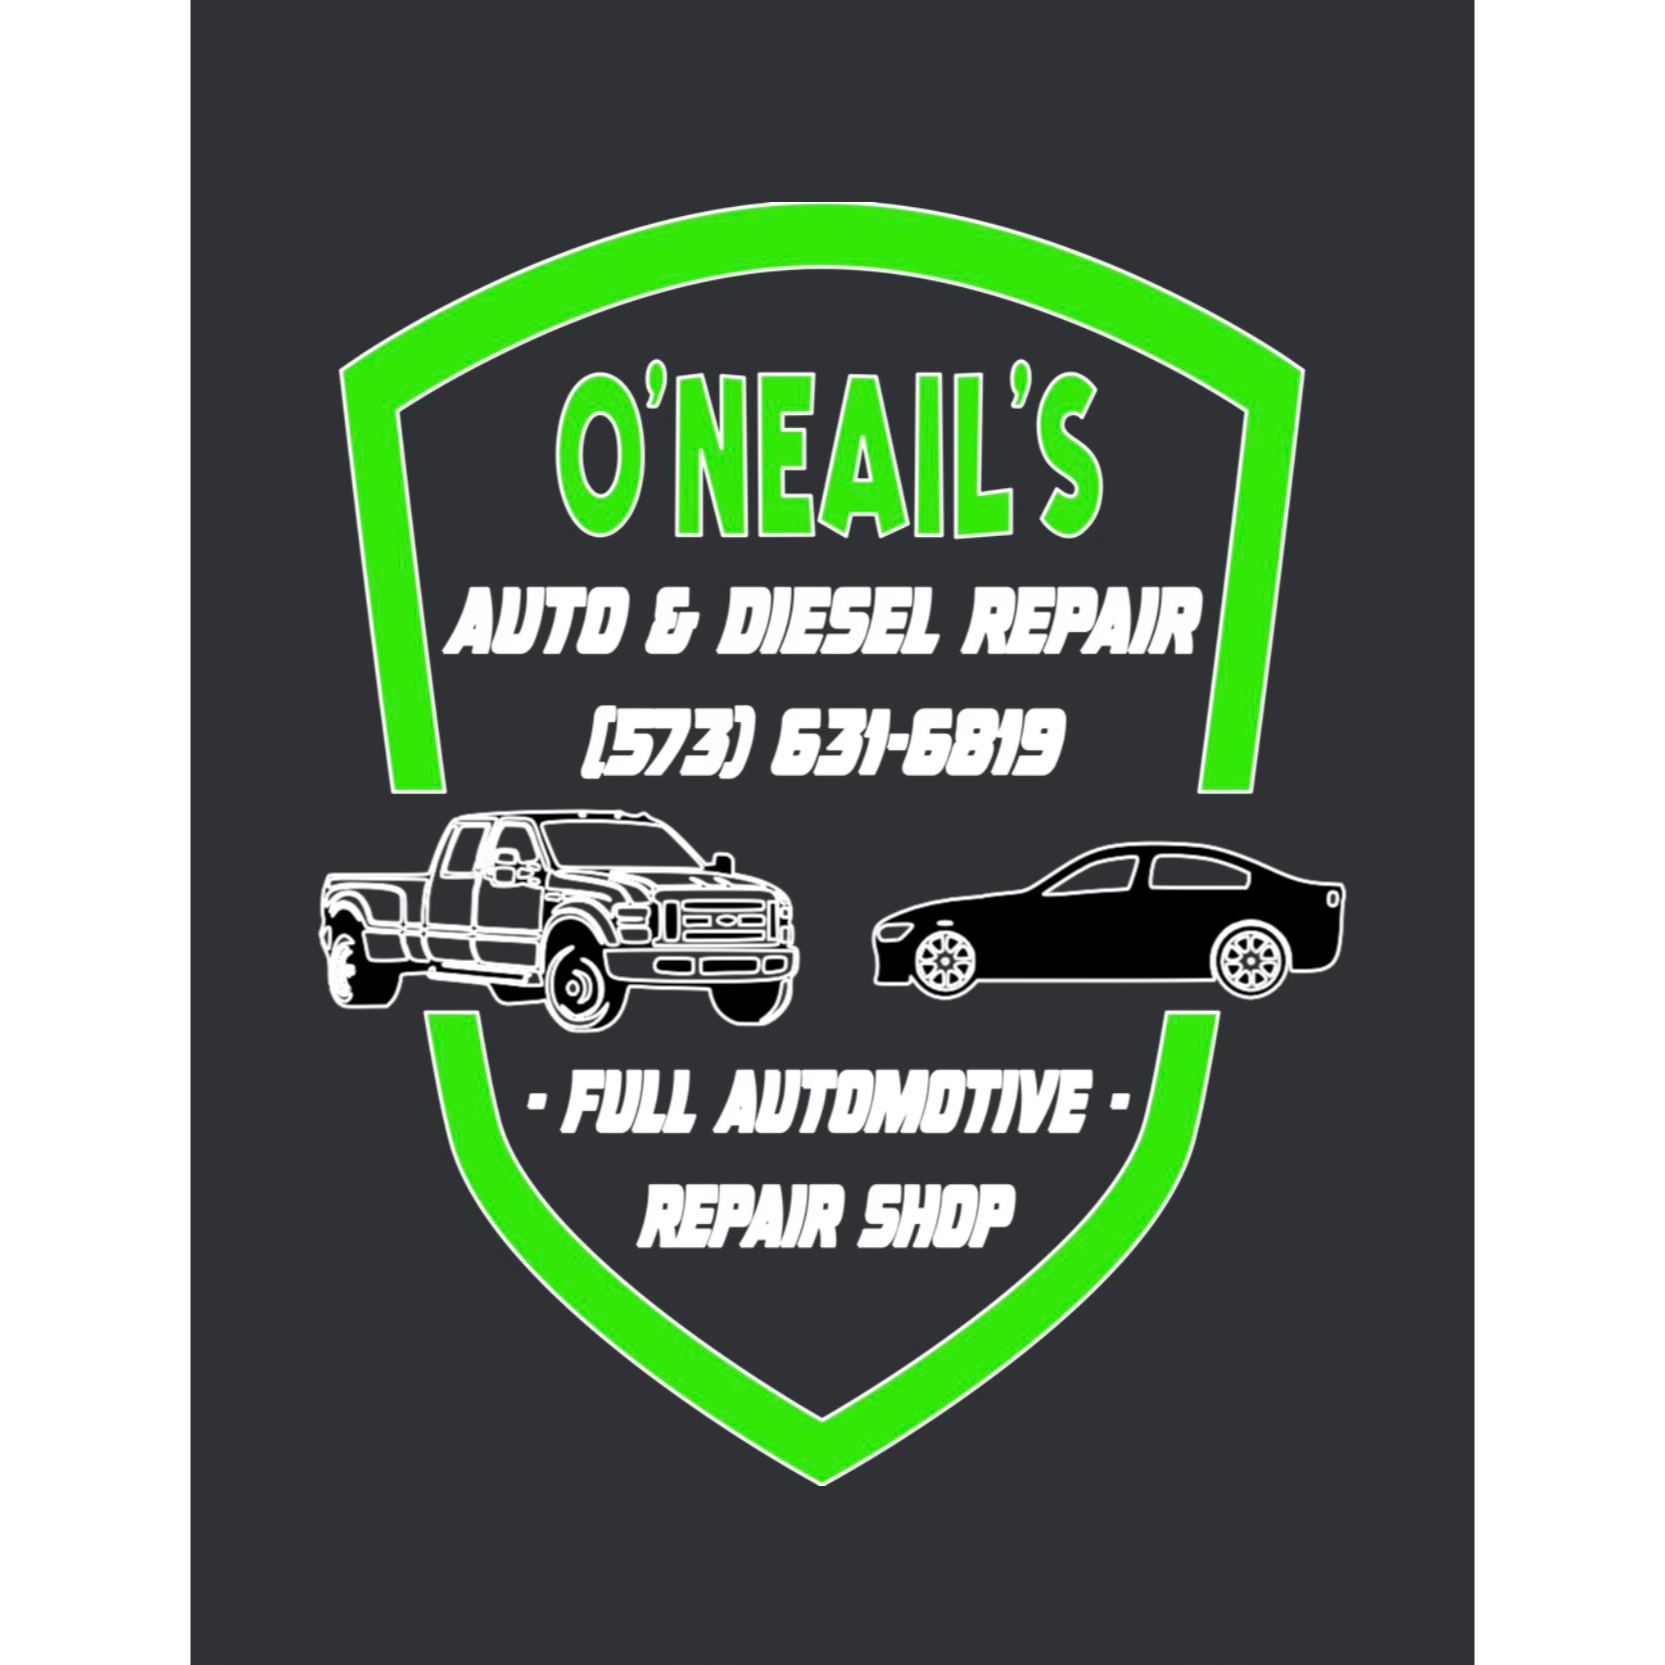 Oneail's Auto & Diesel